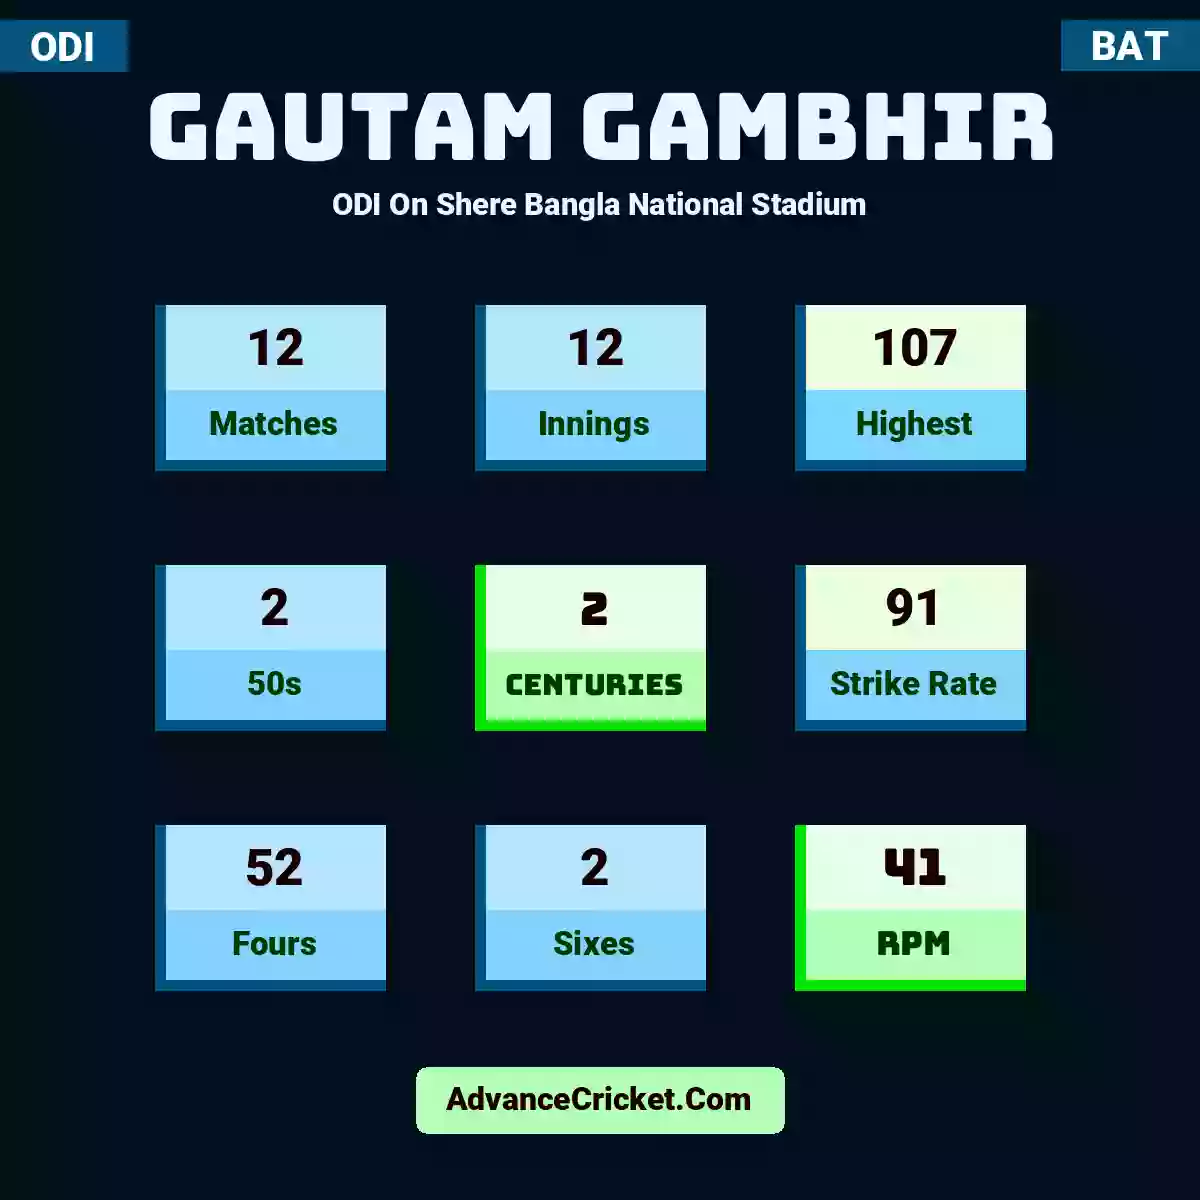 Gautam Gambhir ODI  On Shere Bangla National Stadium, Gautam Gambhir played 12 matches, scored 107 runs as highest, 2 half-centuries, and 2 centuries, with a strike rate of 91. G.Gambhir hit 52 fours and 2 sixes, with an RPM of 41.